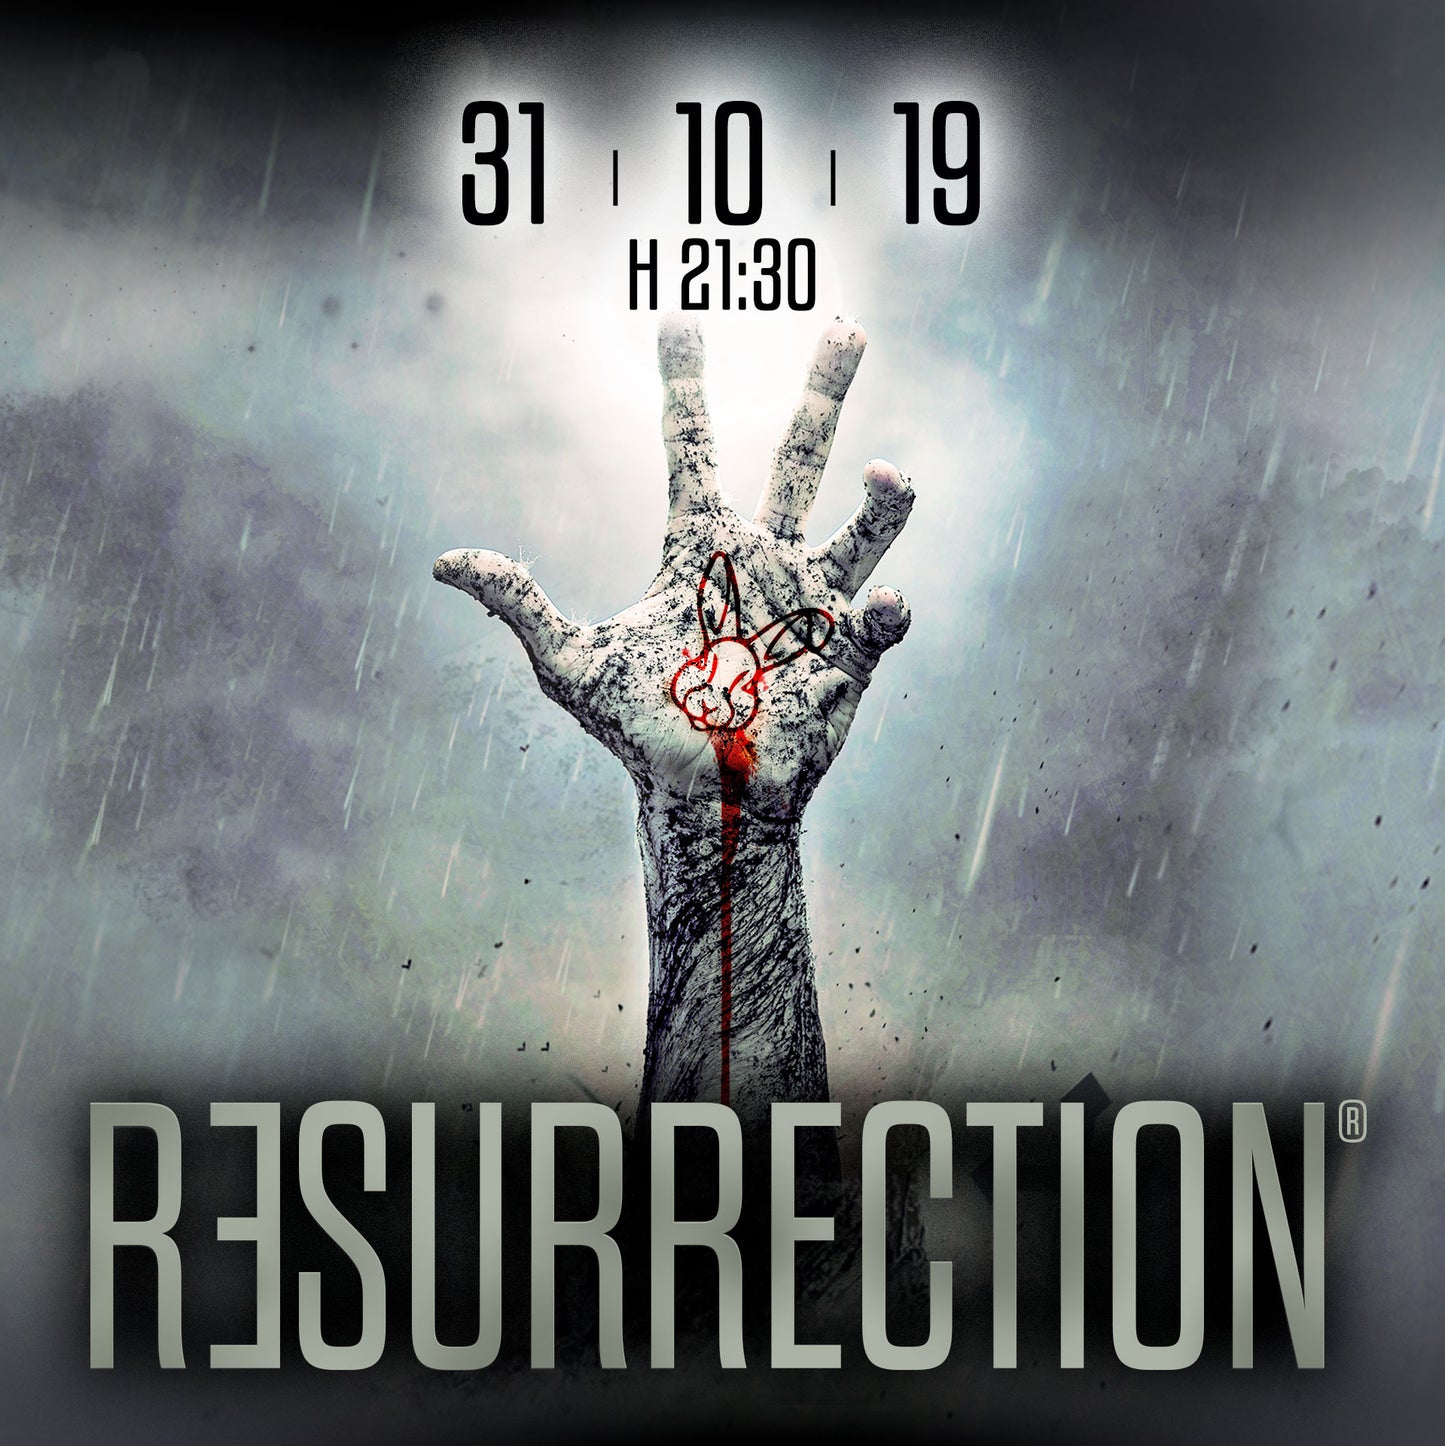 2019 7. RESURRECTION